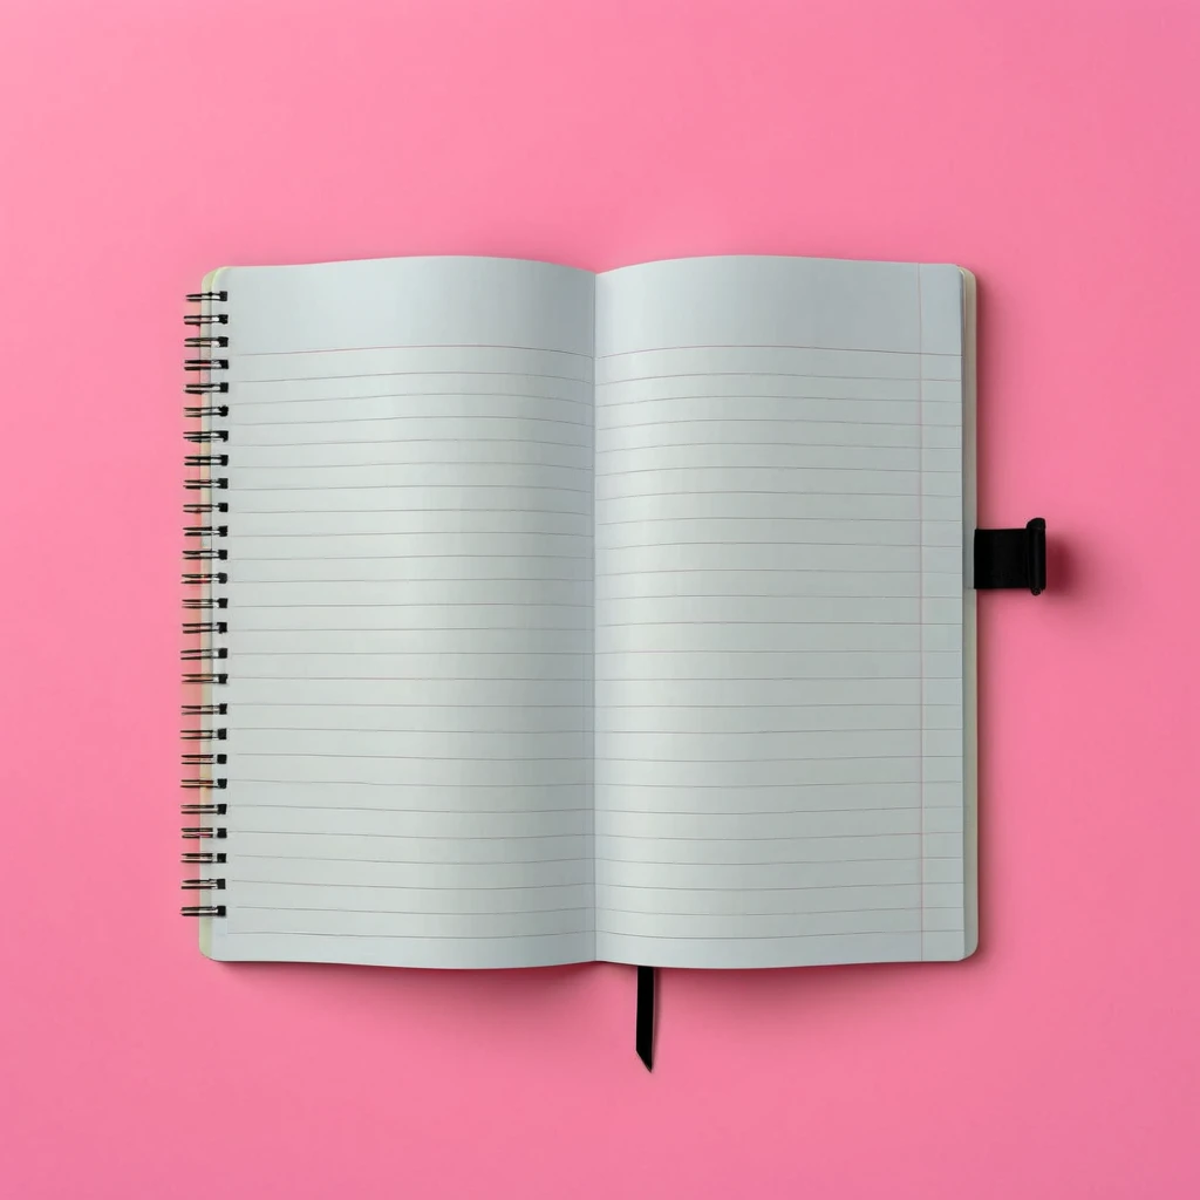 (notebook showcase) <lora:20_notebook_showcase:1.1>
Pink background,
high quality, professional, highres, amazing, dramati...